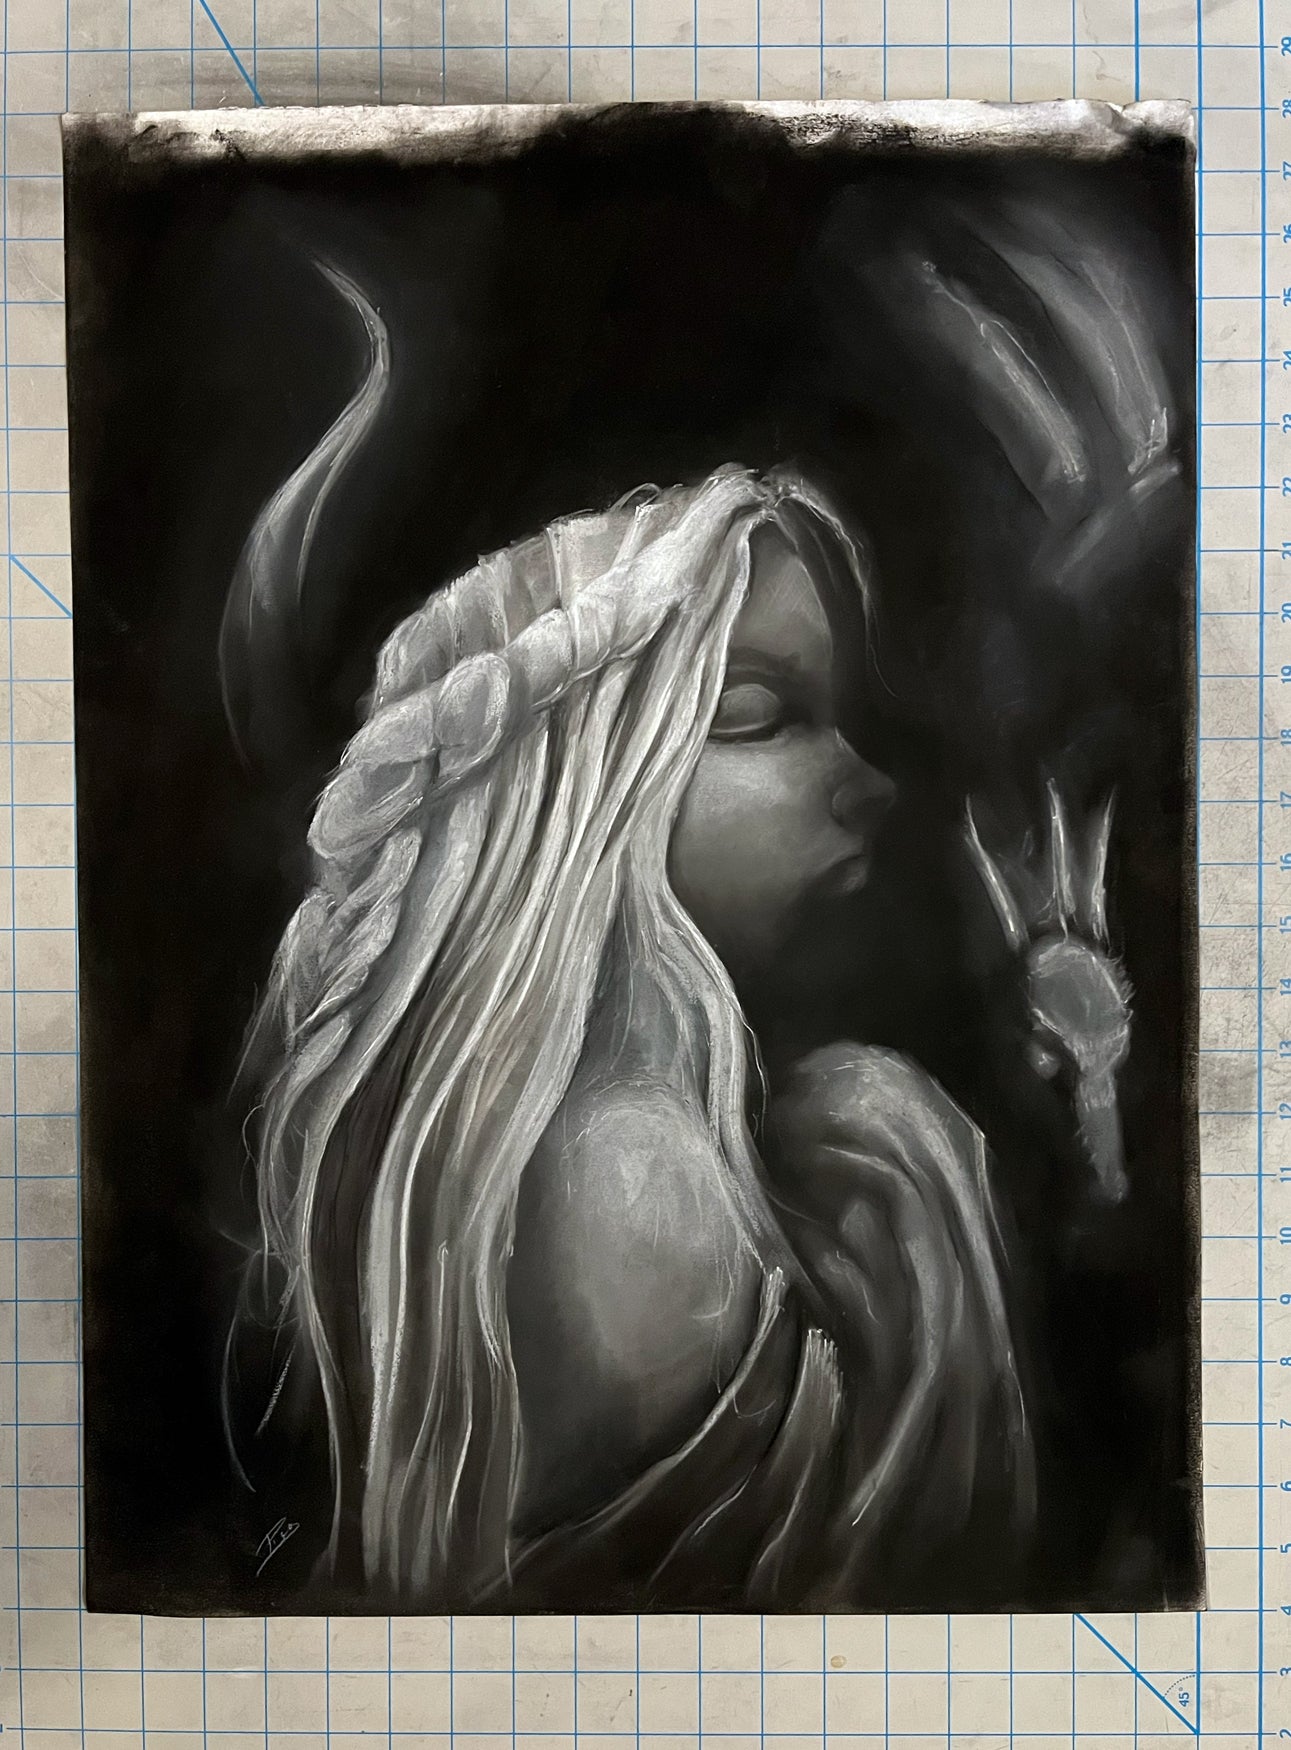 Dragon Girl - Original Charcoal Illustration